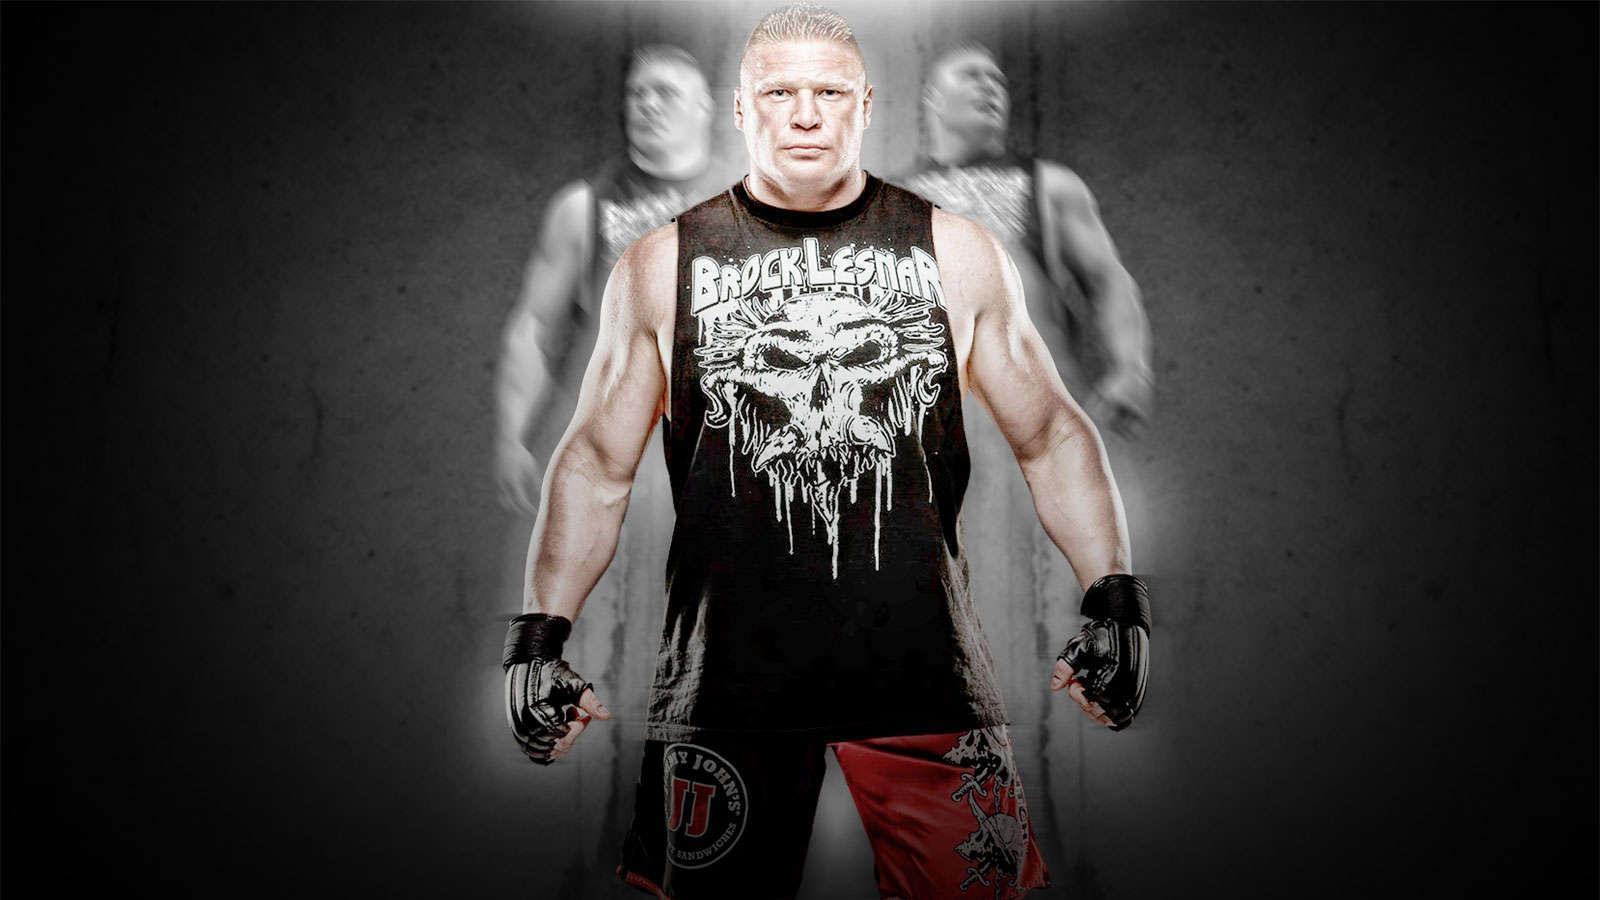 WWE Brock Lesnar 2016 HD Desktop Wallpaper Image. Most HD